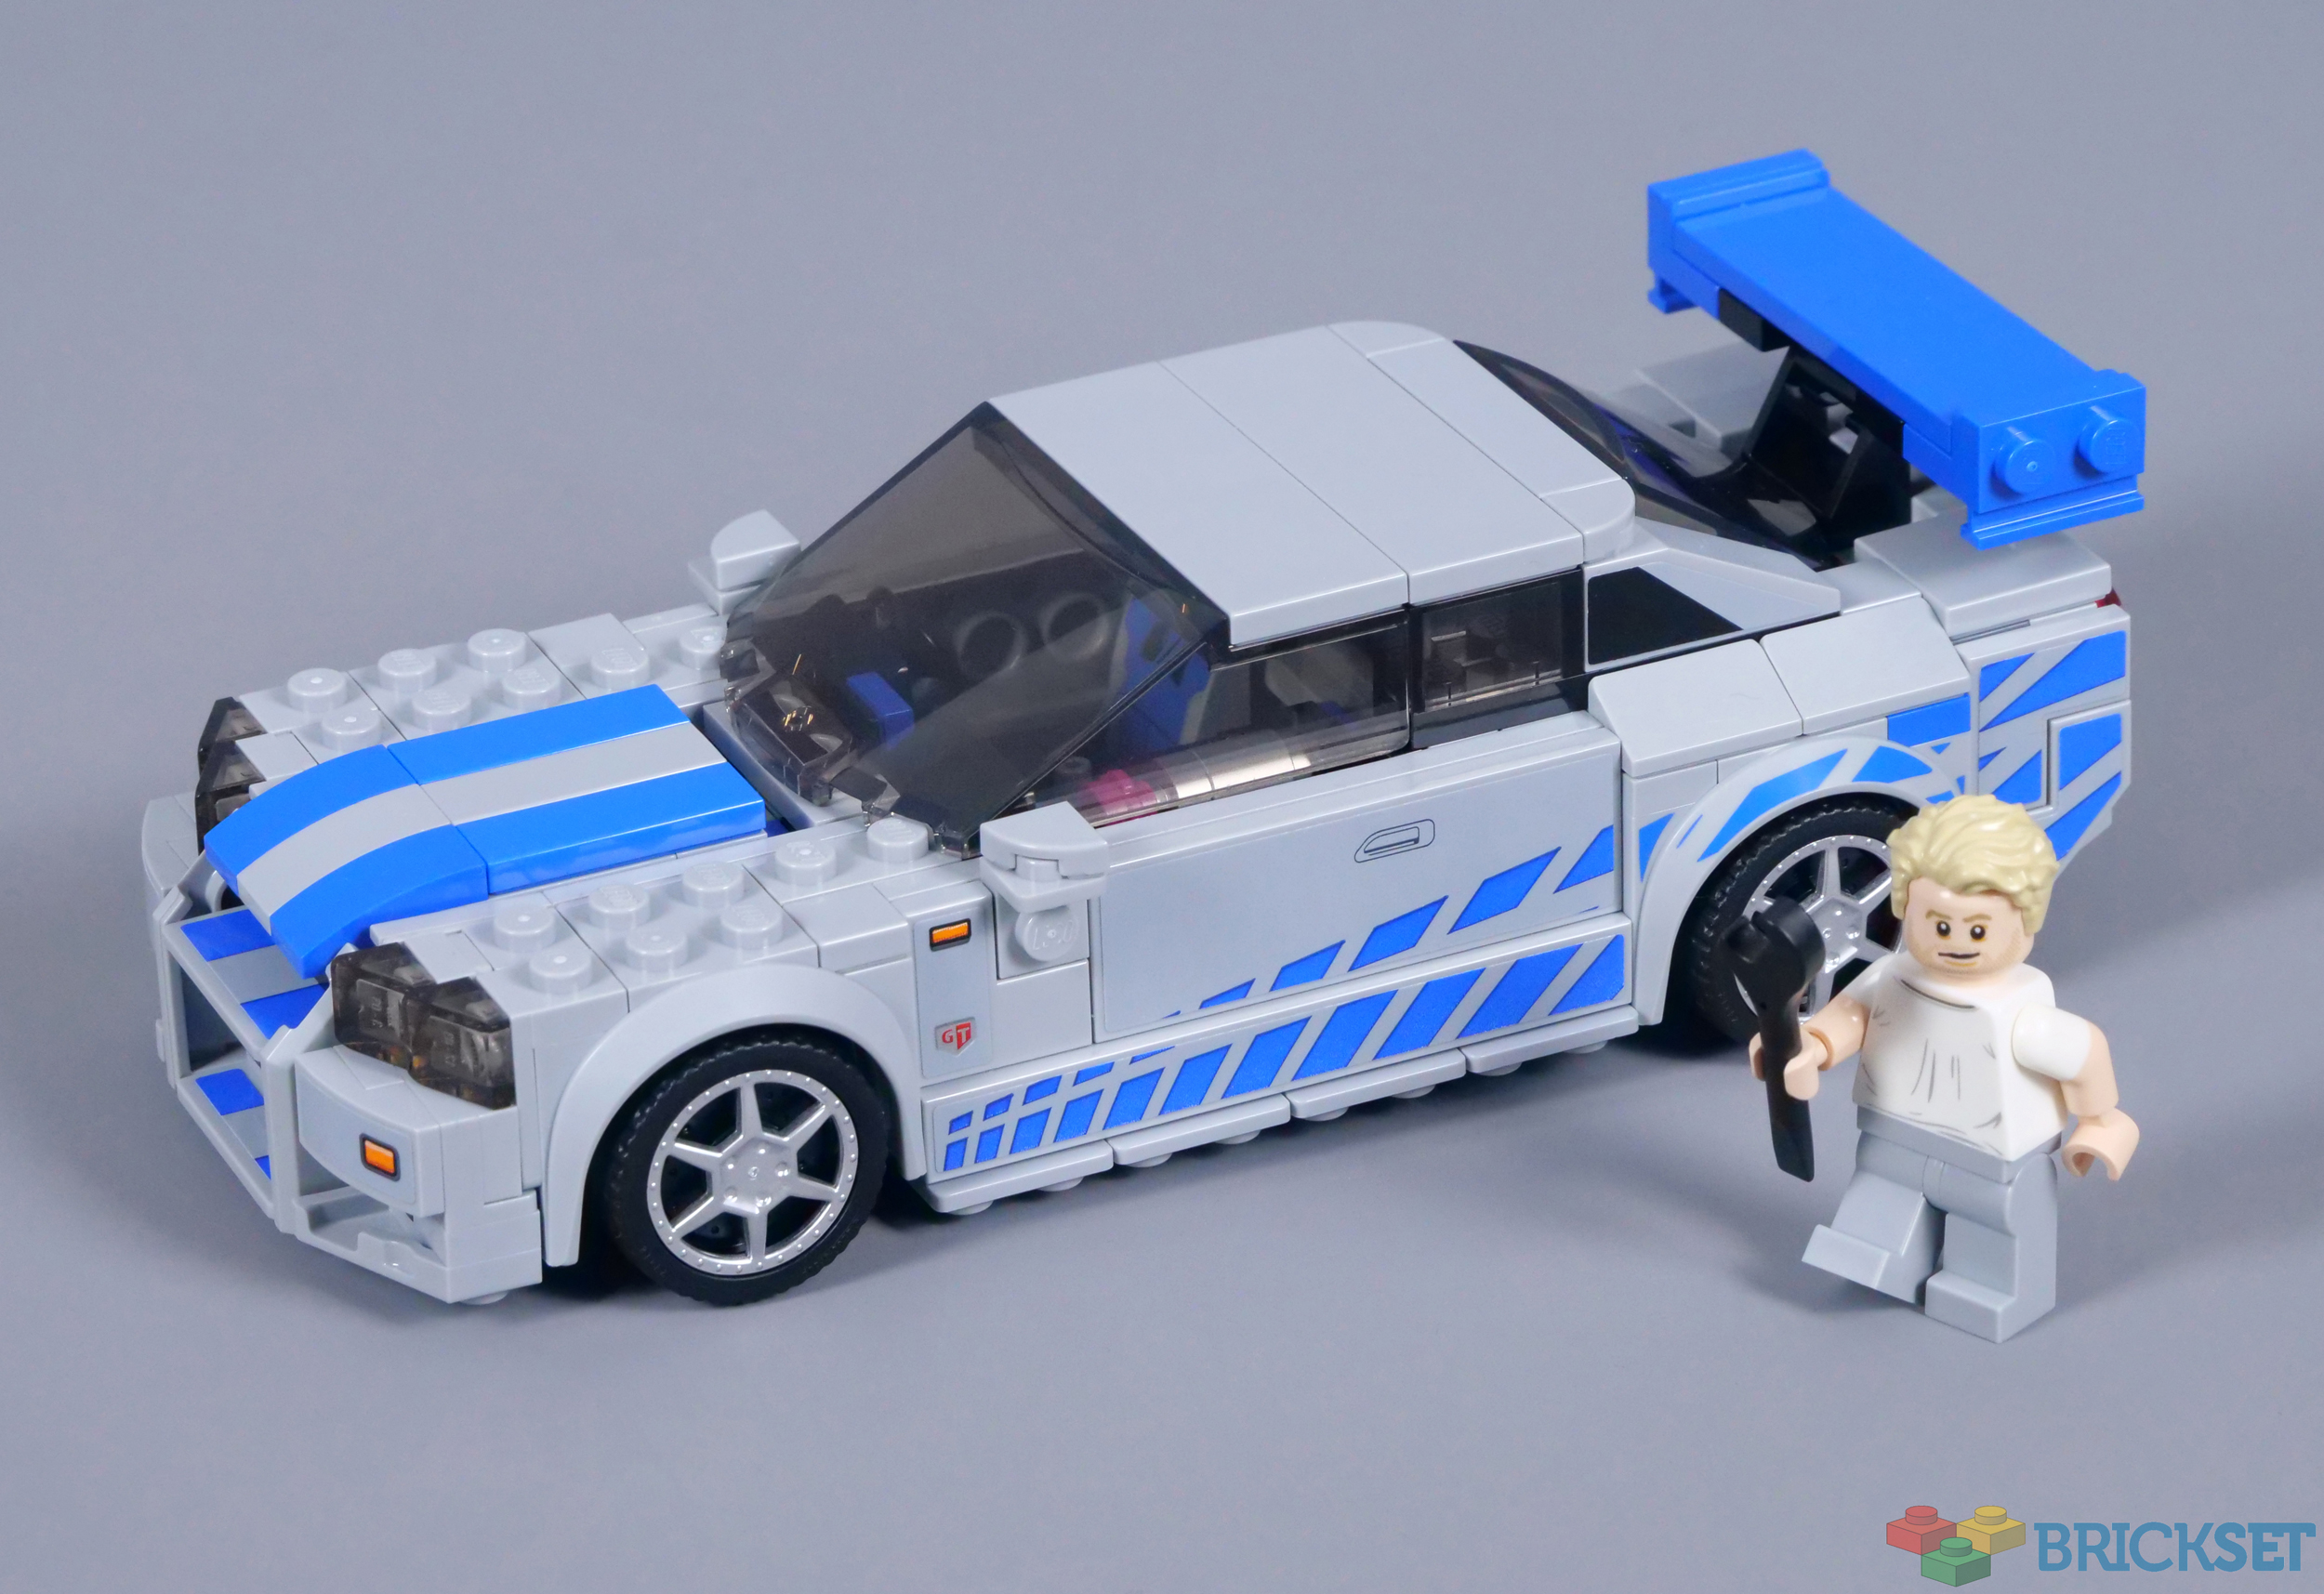 LEGO 2 Fast 2 Furious Nissan Skyline GT-R (R34) 76917 Instructions